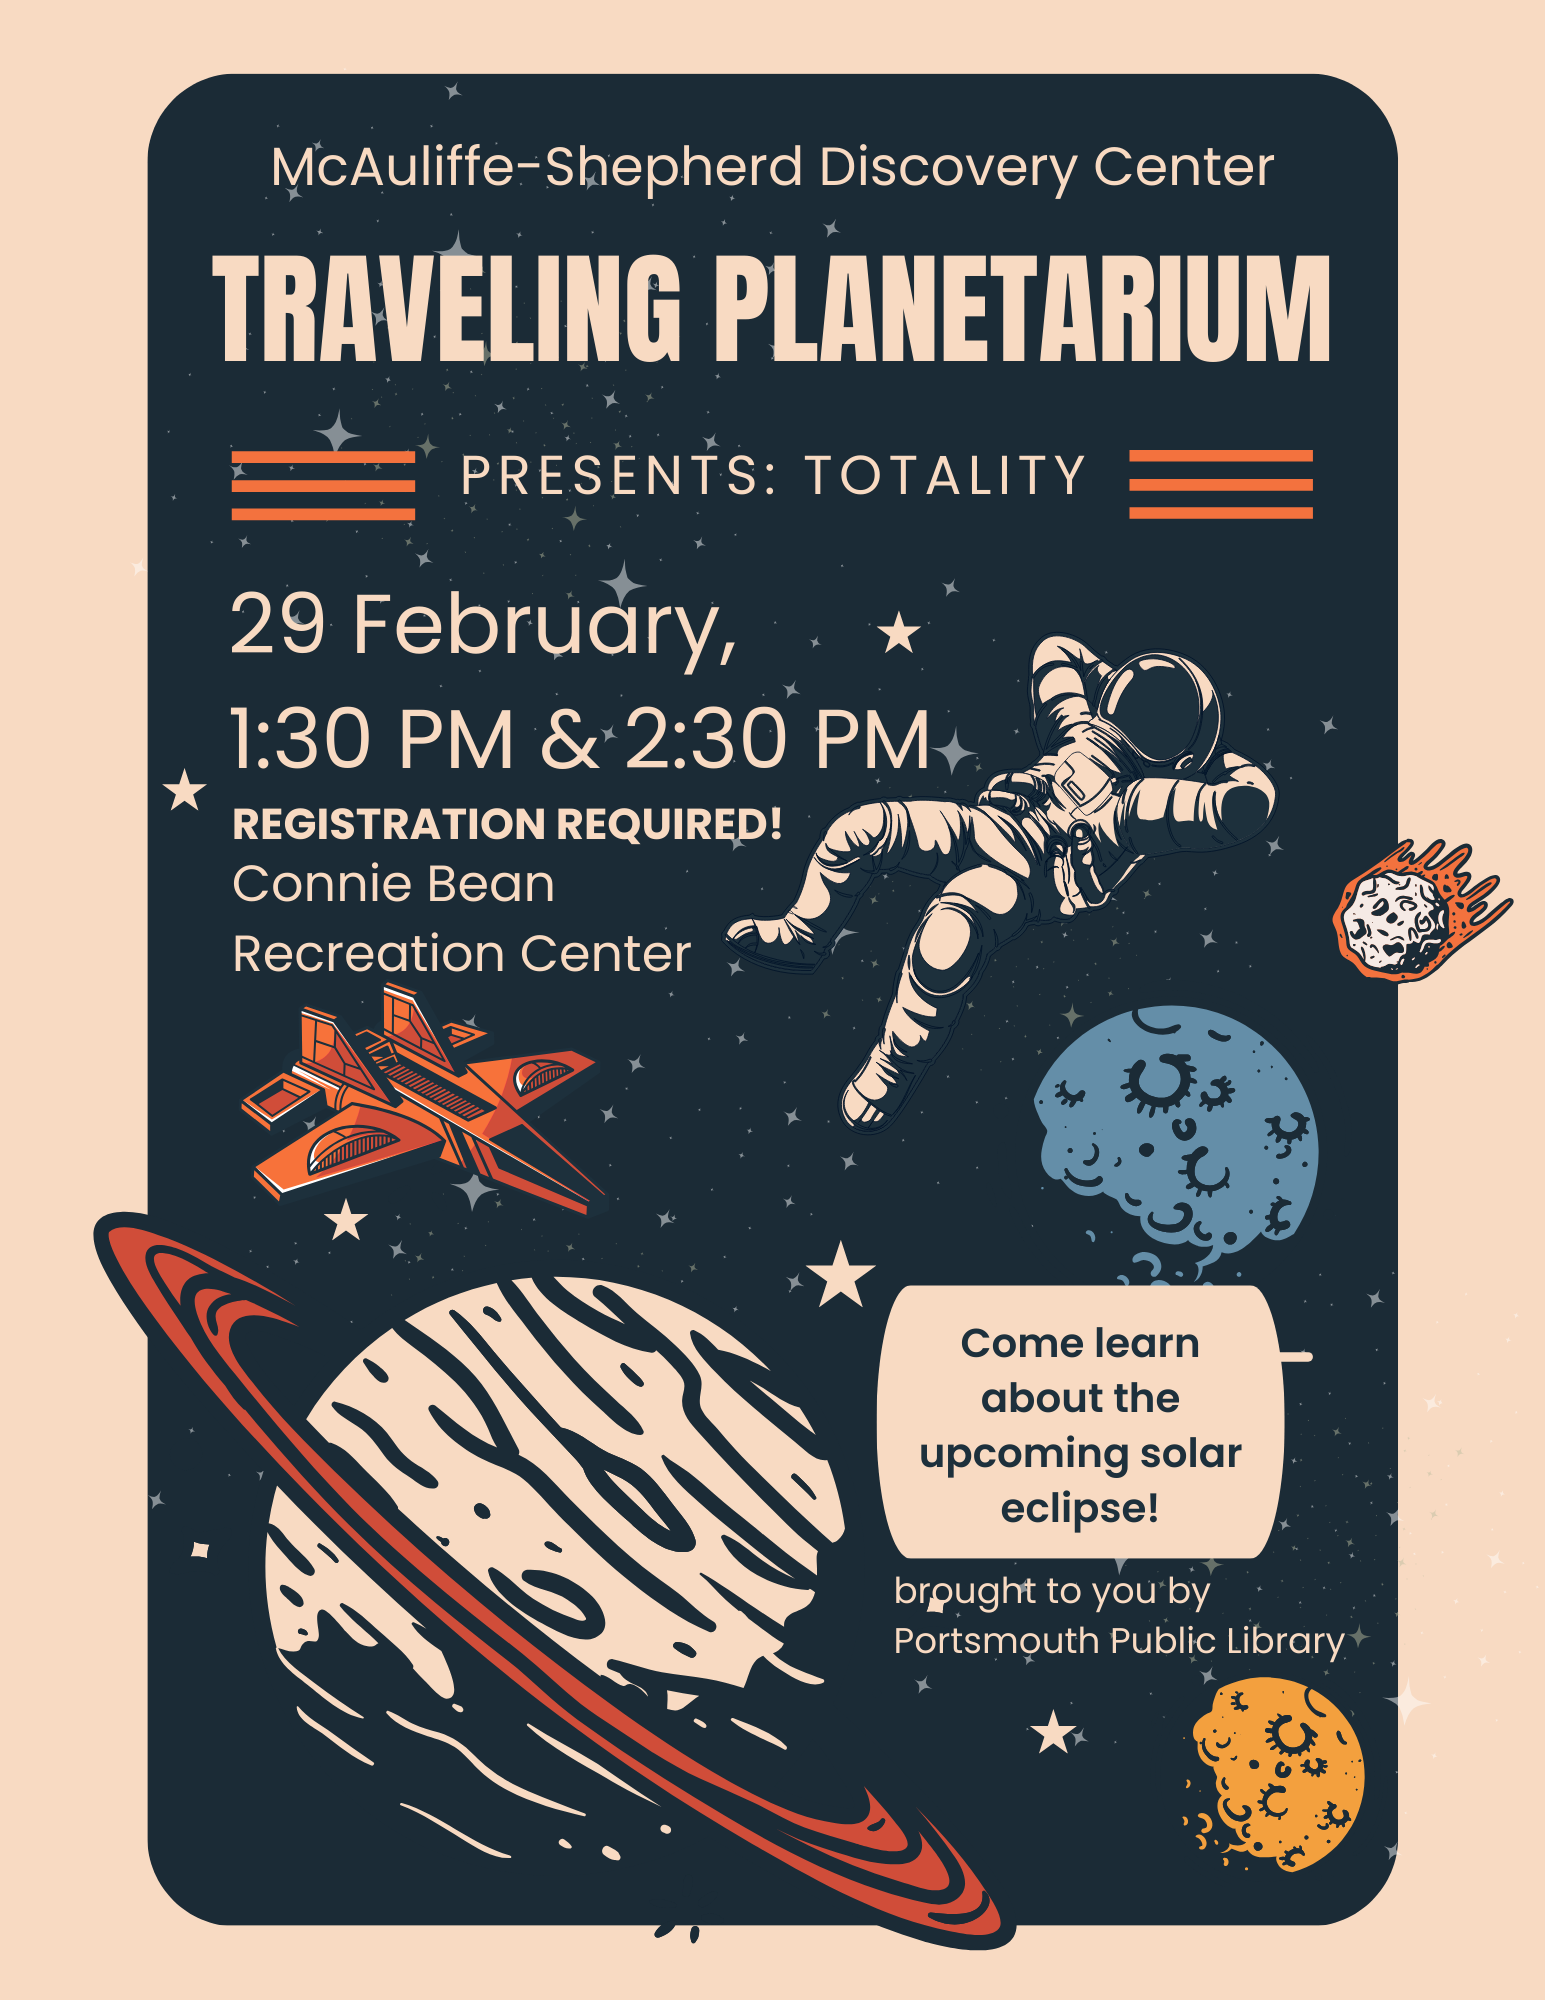 Traveling Planetarium, planets on background